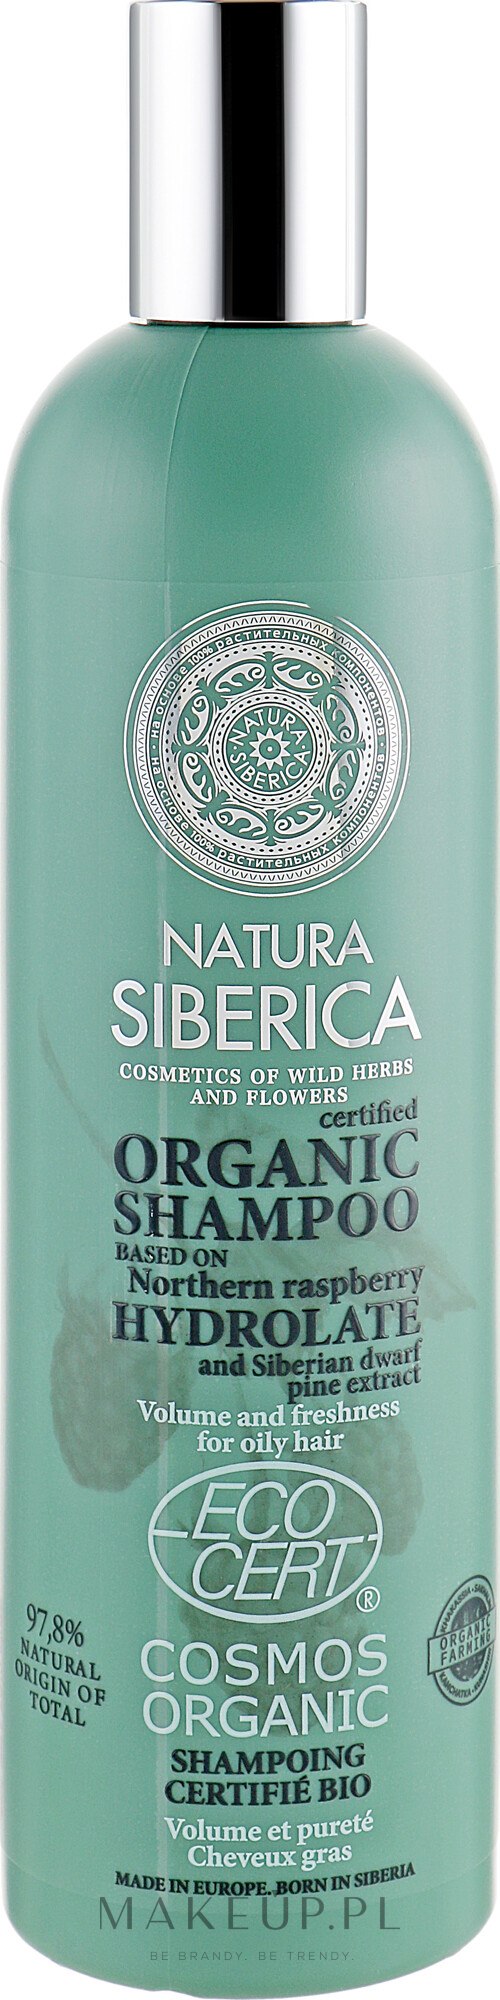 natura siberica szampon rodzaje